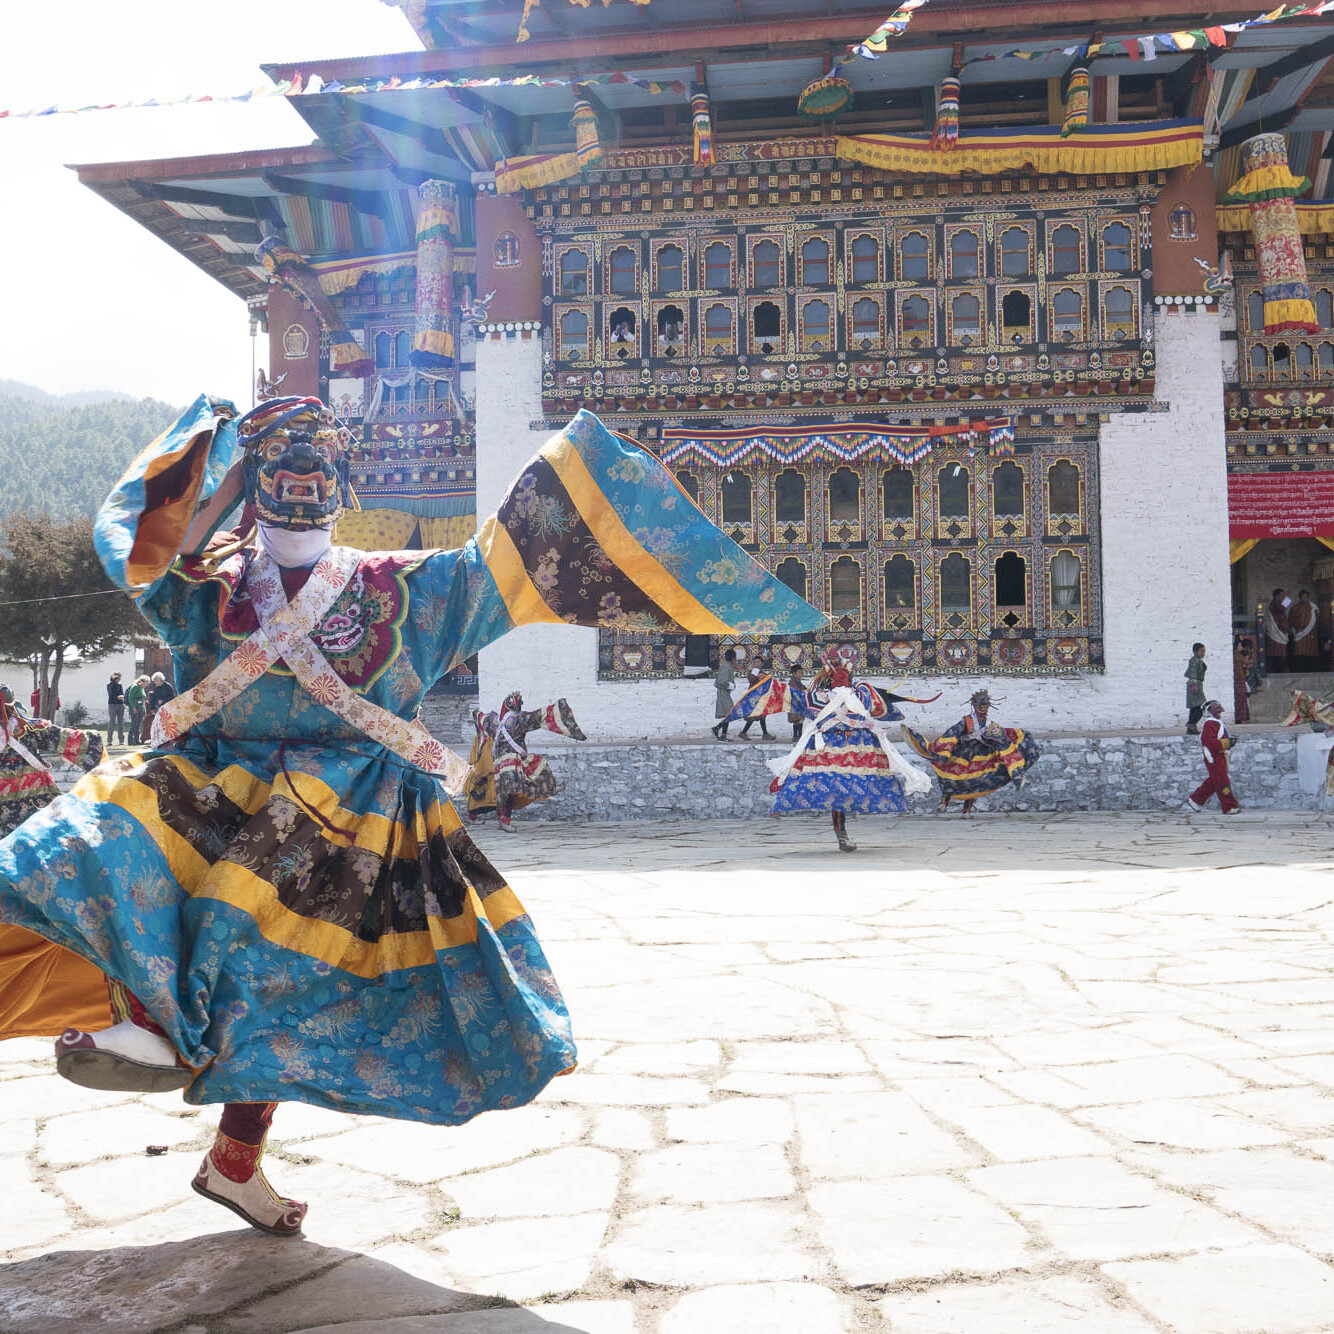 dancing at a festival in Bhutan